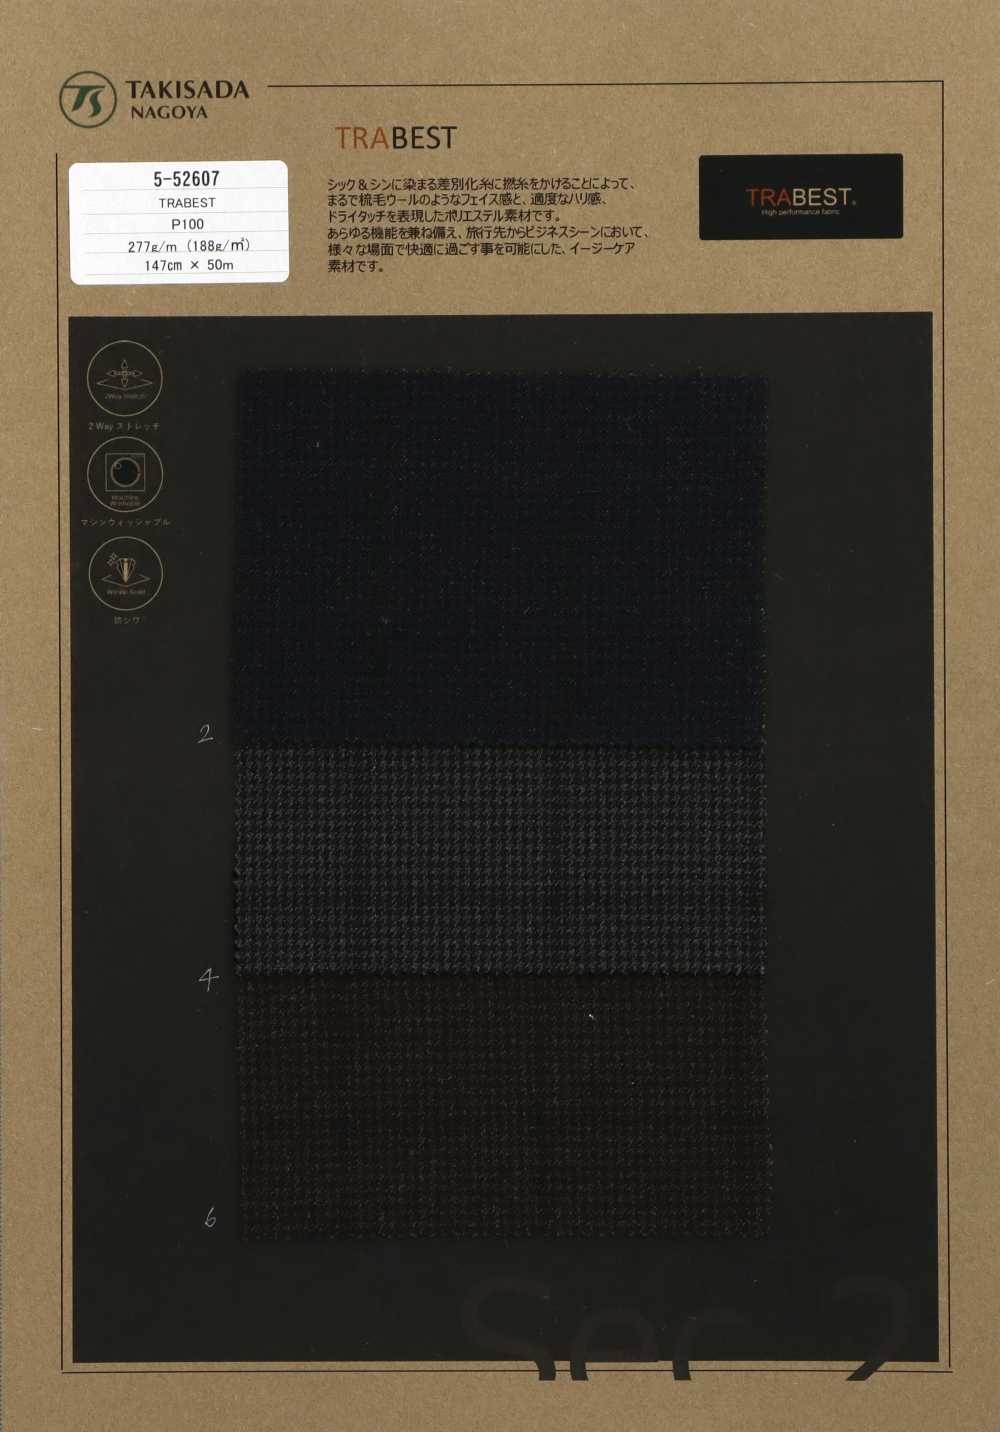 5-52607 TRABEST Soft Touch Houndstooth&amp; Window Pen[Textile / Fabric] Takisada Nagoya